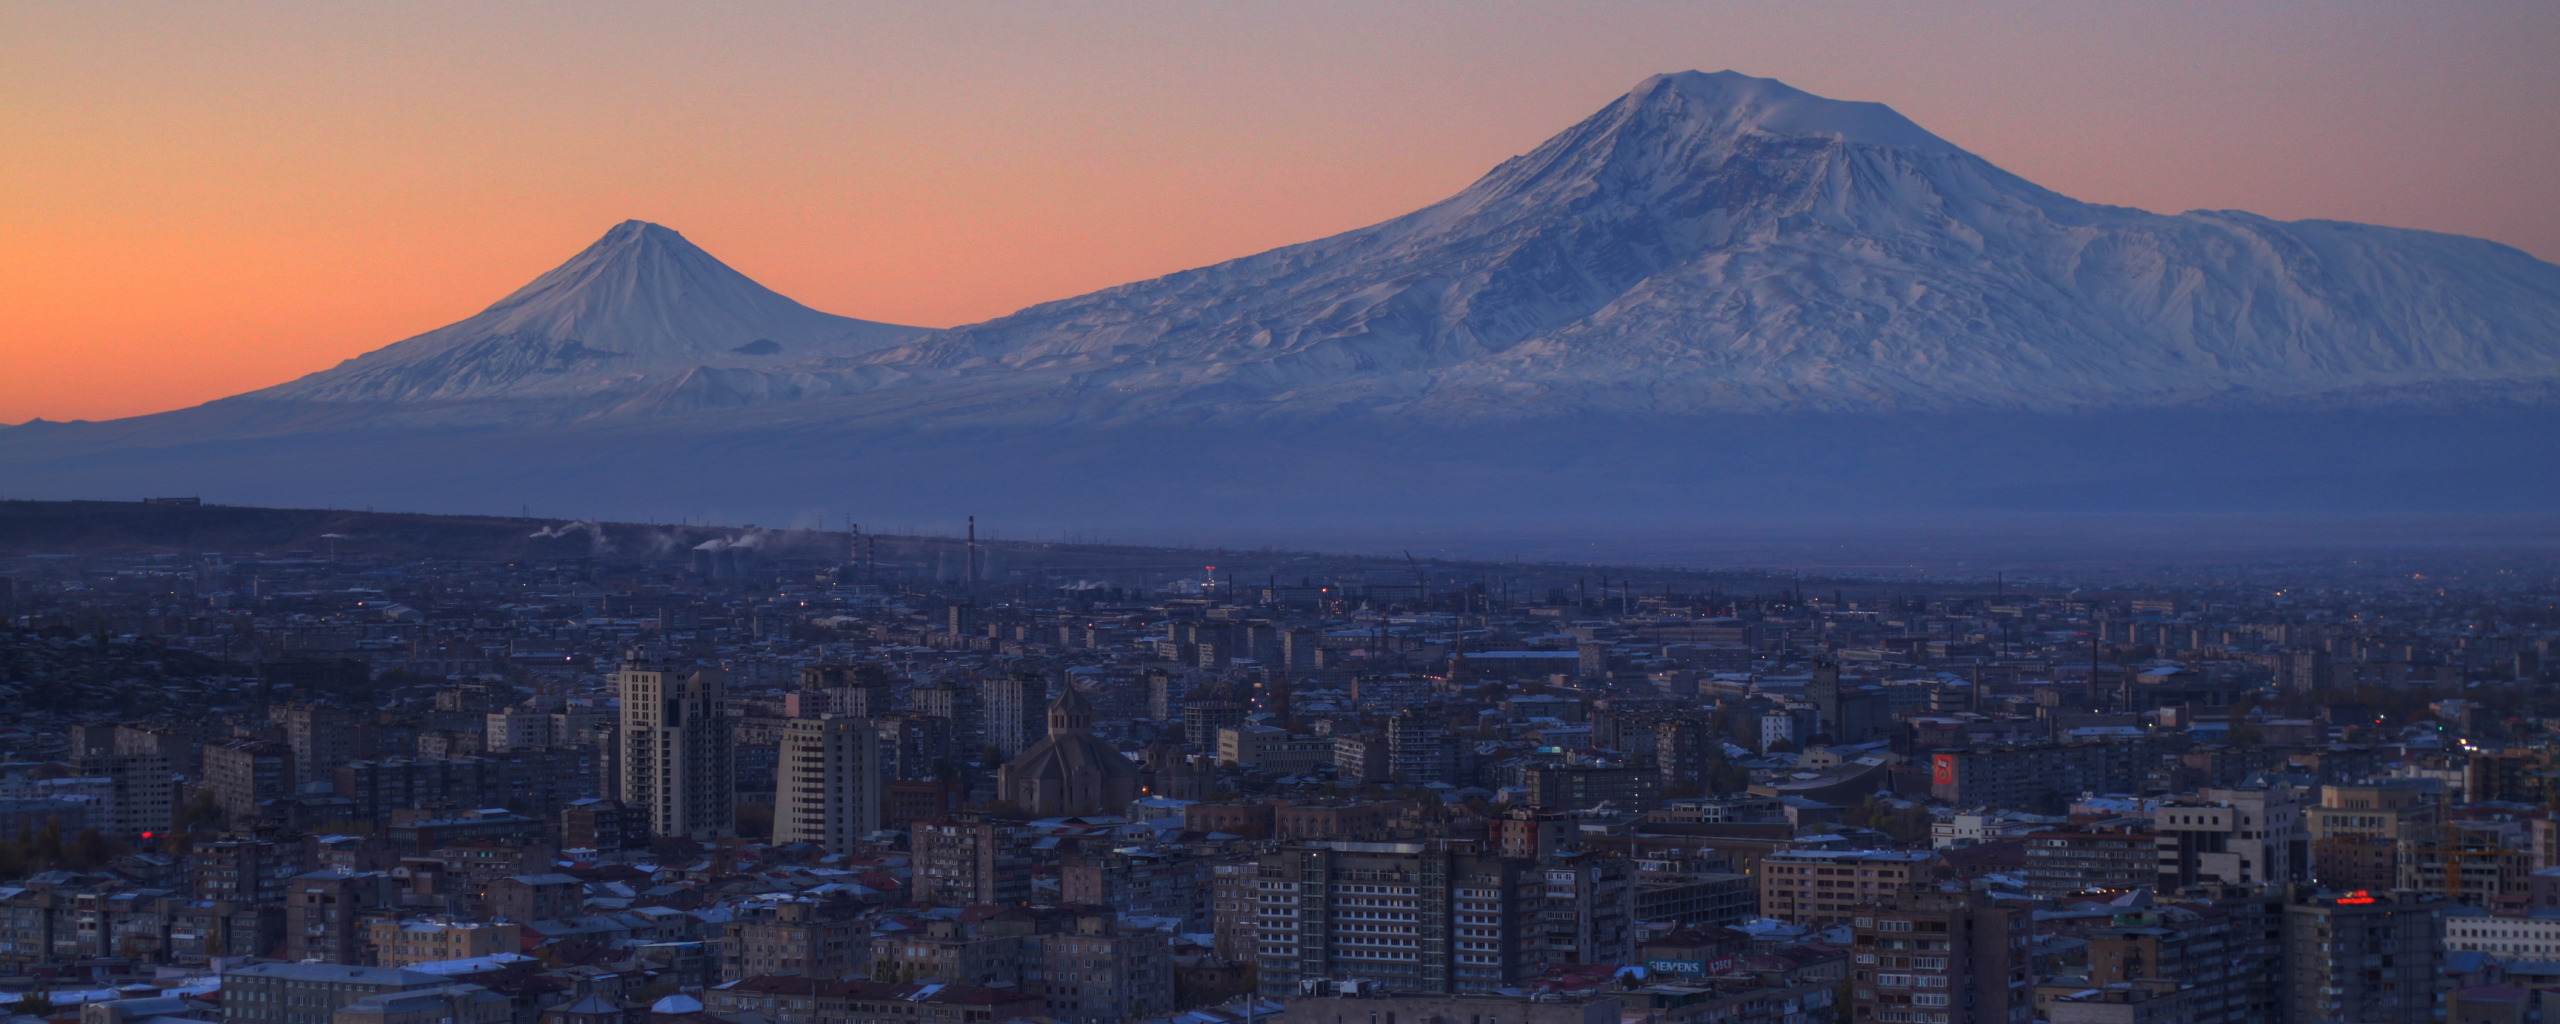 Белый ереван. Армения Ереван Арарат. Ереван гора Арарат. Гора Арарат вид с Еревана. Вид на Арарат из Еревана.